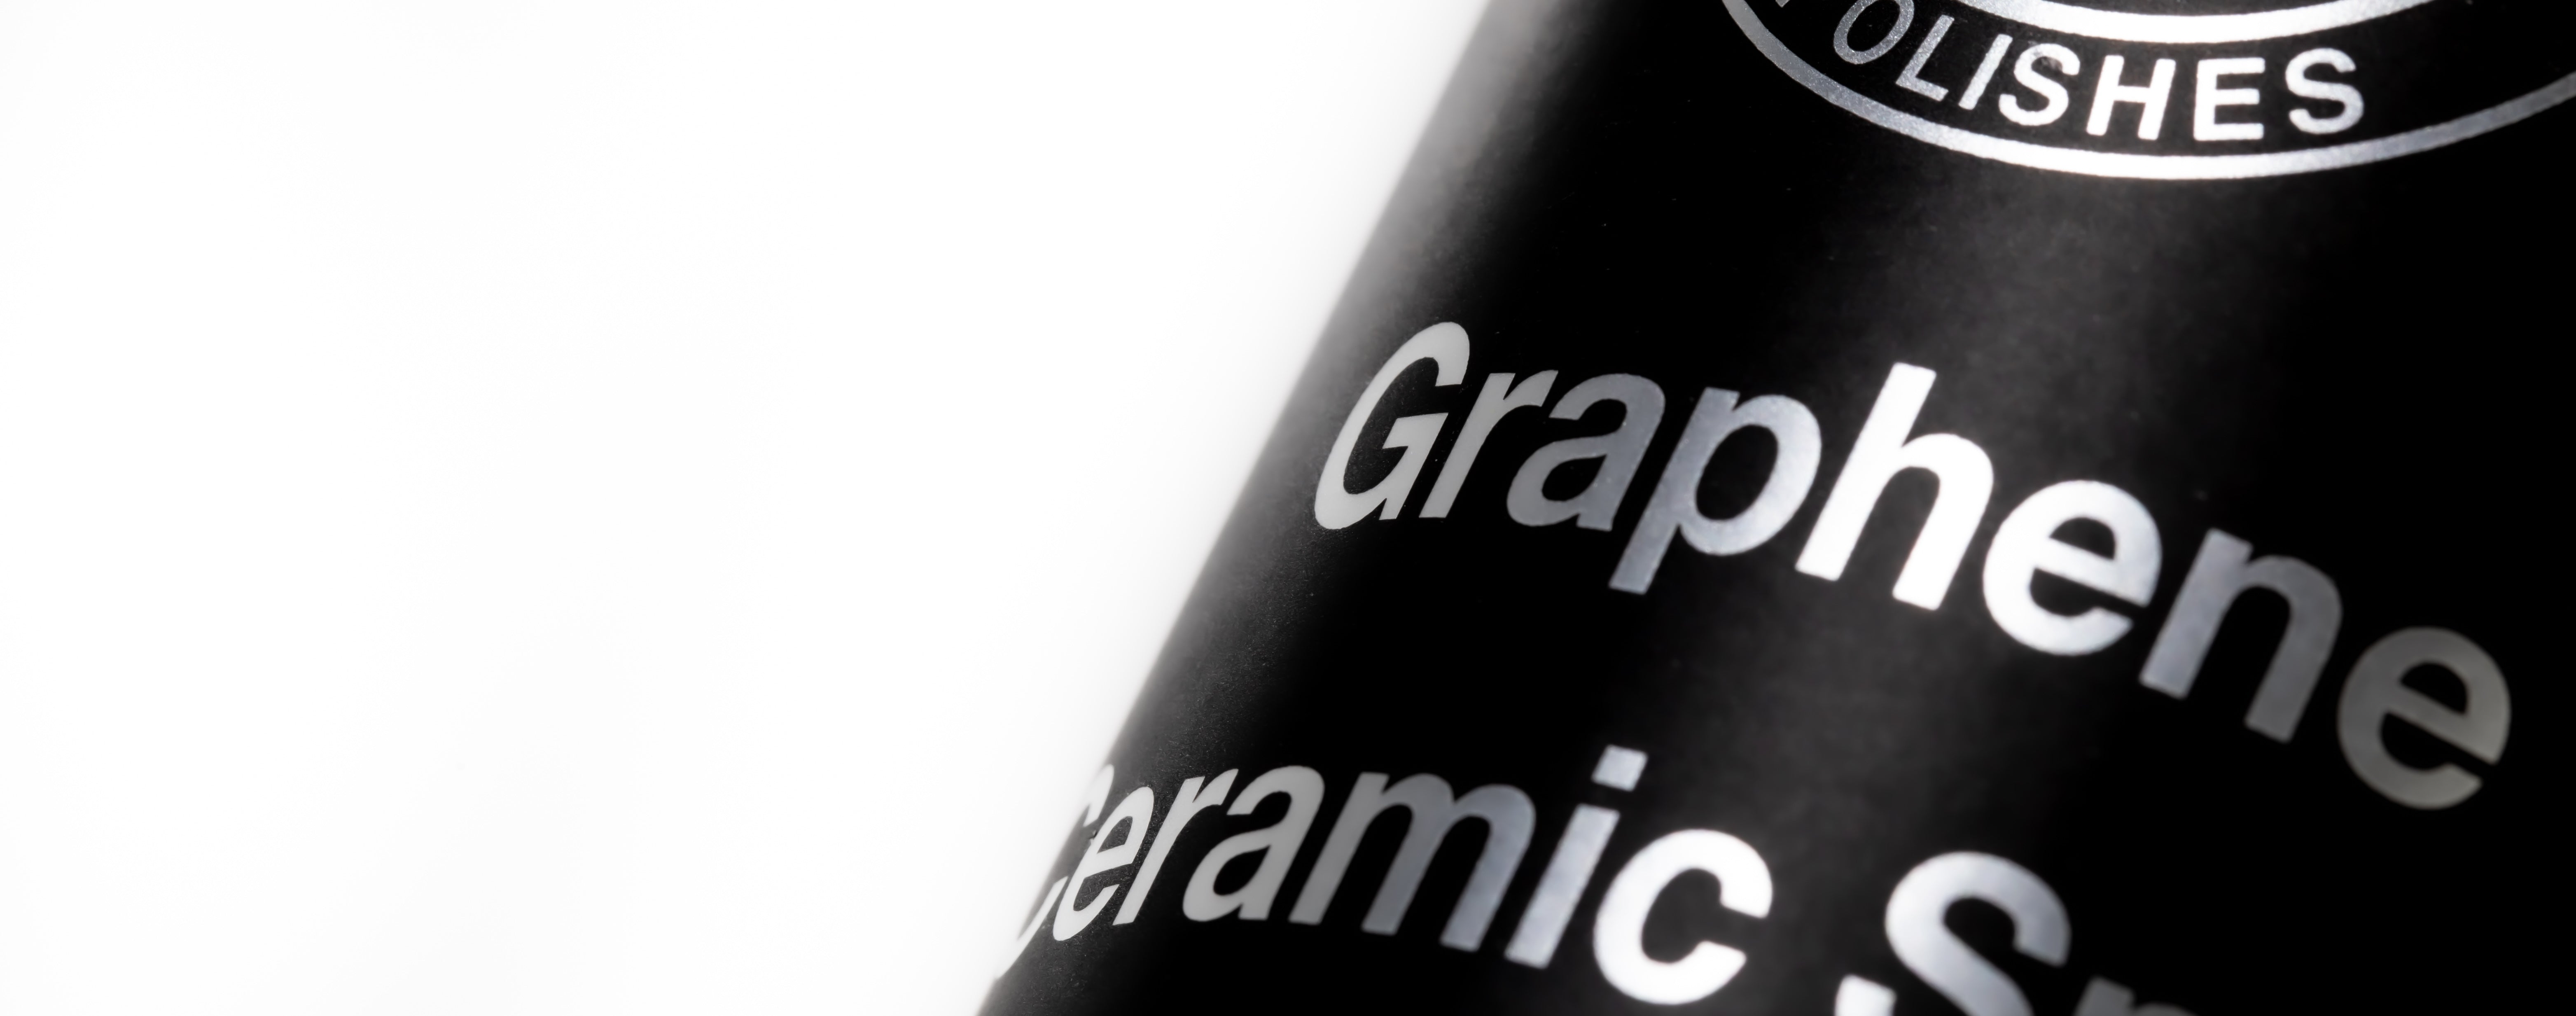 Adam's UV Graphene Ceramic Spray Coating – A True Graphene Spray W